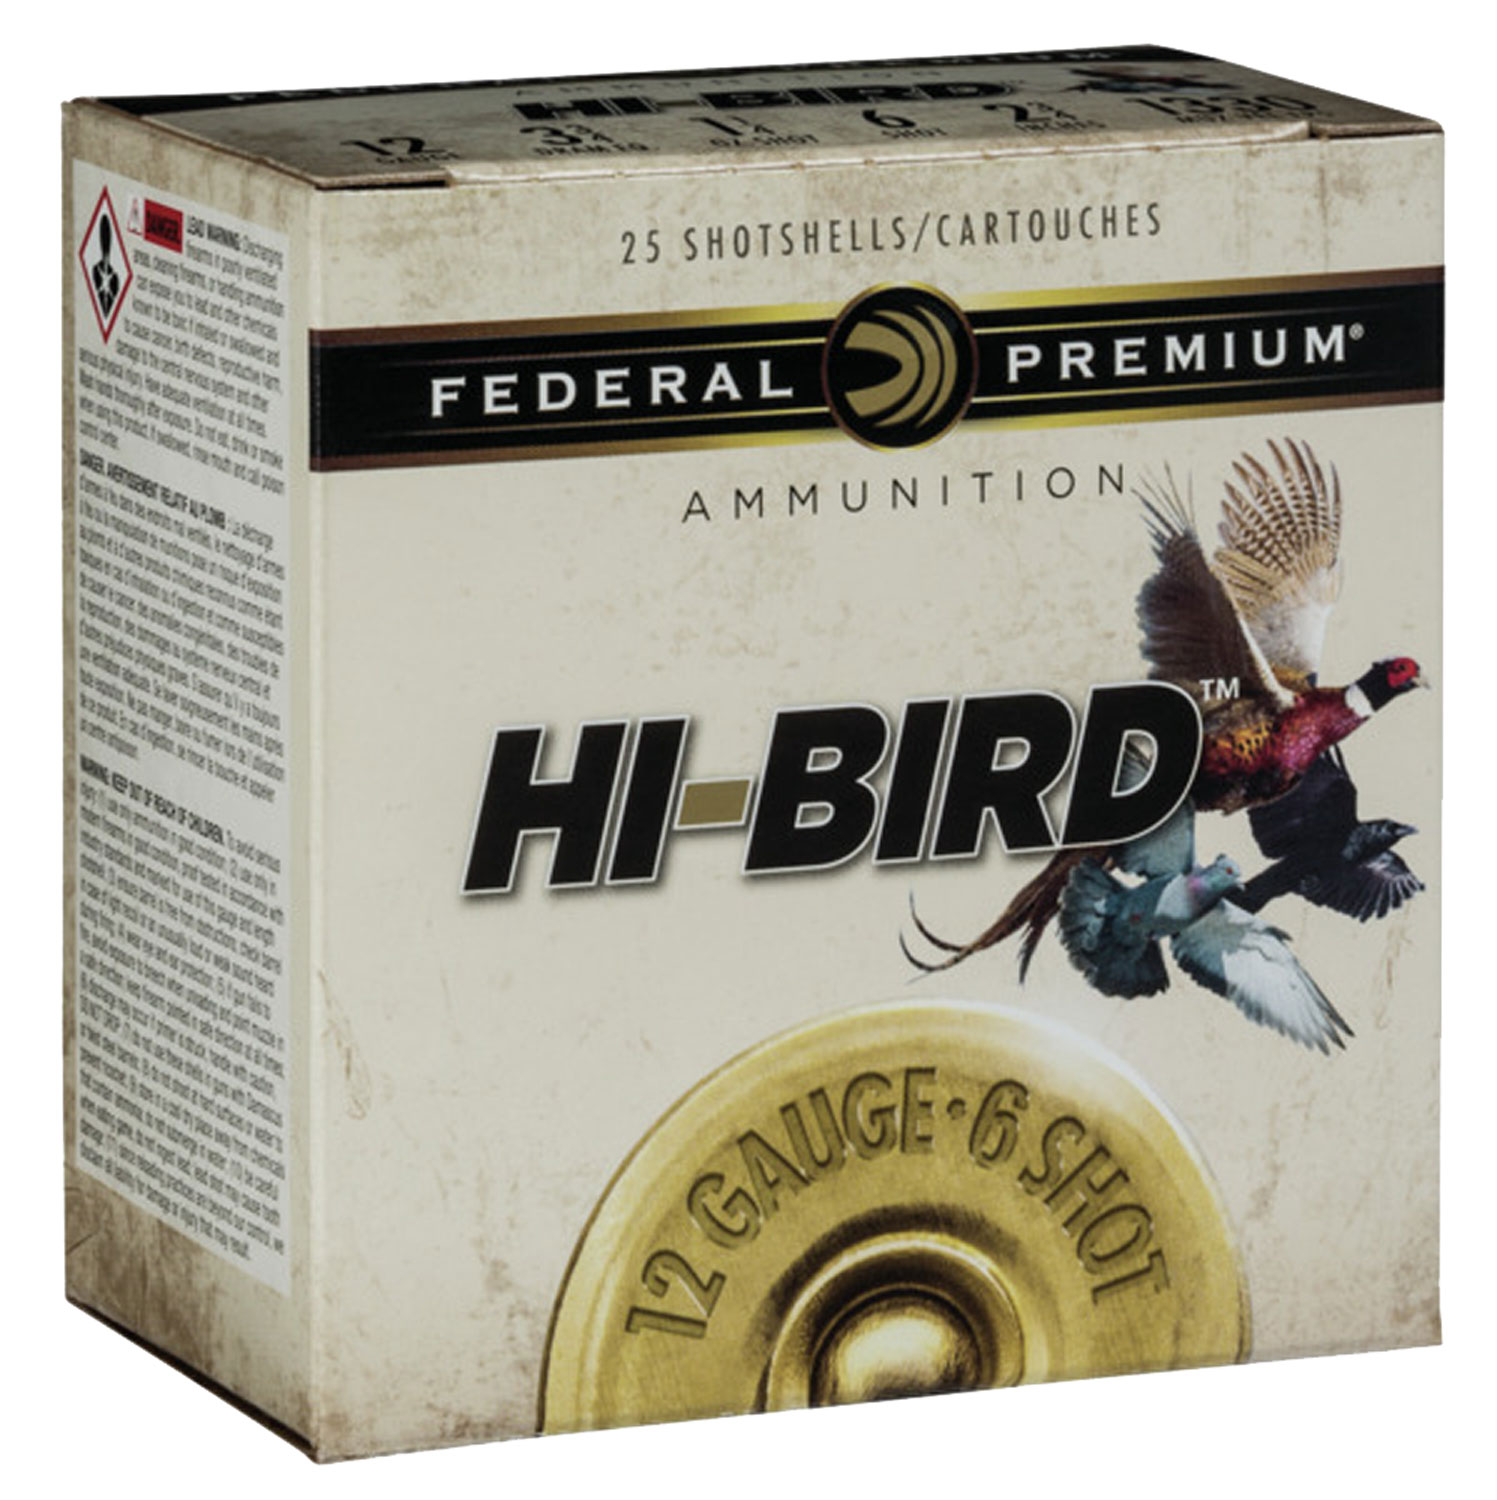 Federal HVF128 Premium Hi-Bird 12 Gauge 2.75